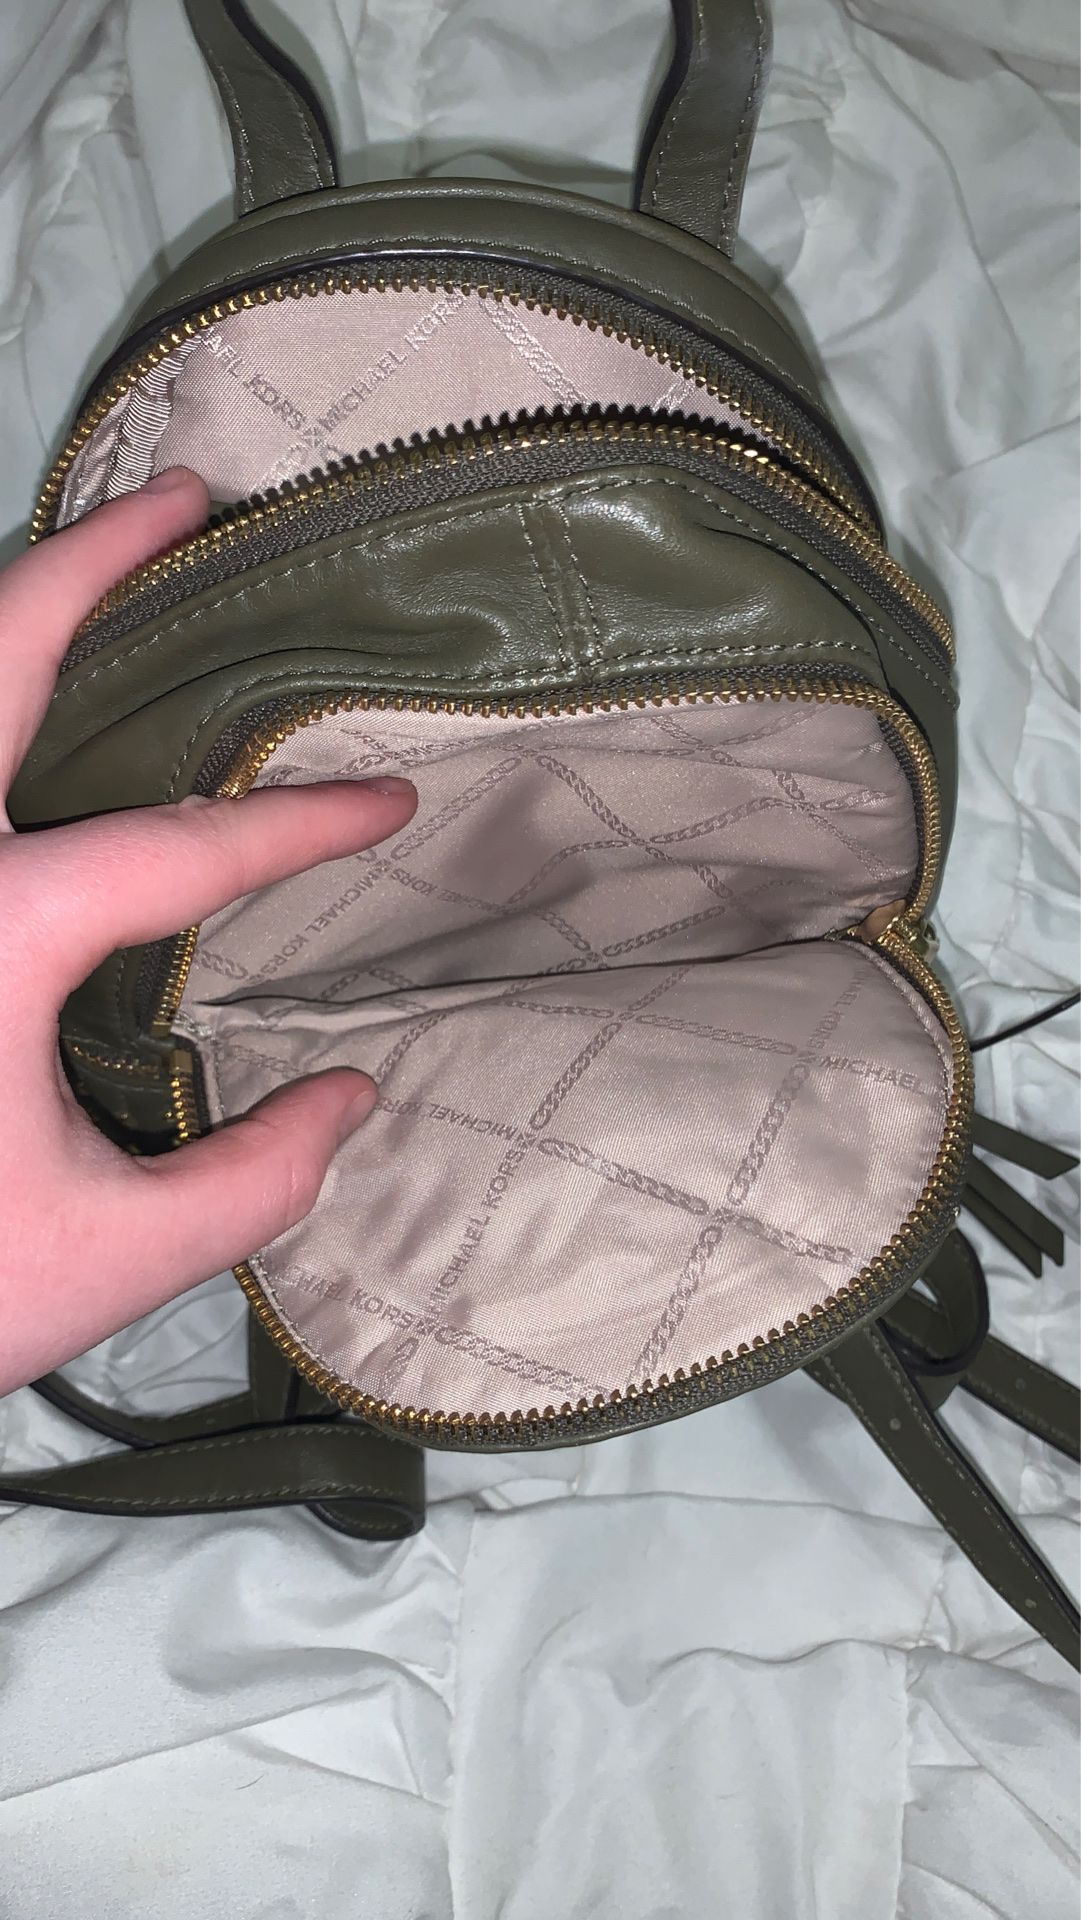 Michael Kors XS convertible backpack purse